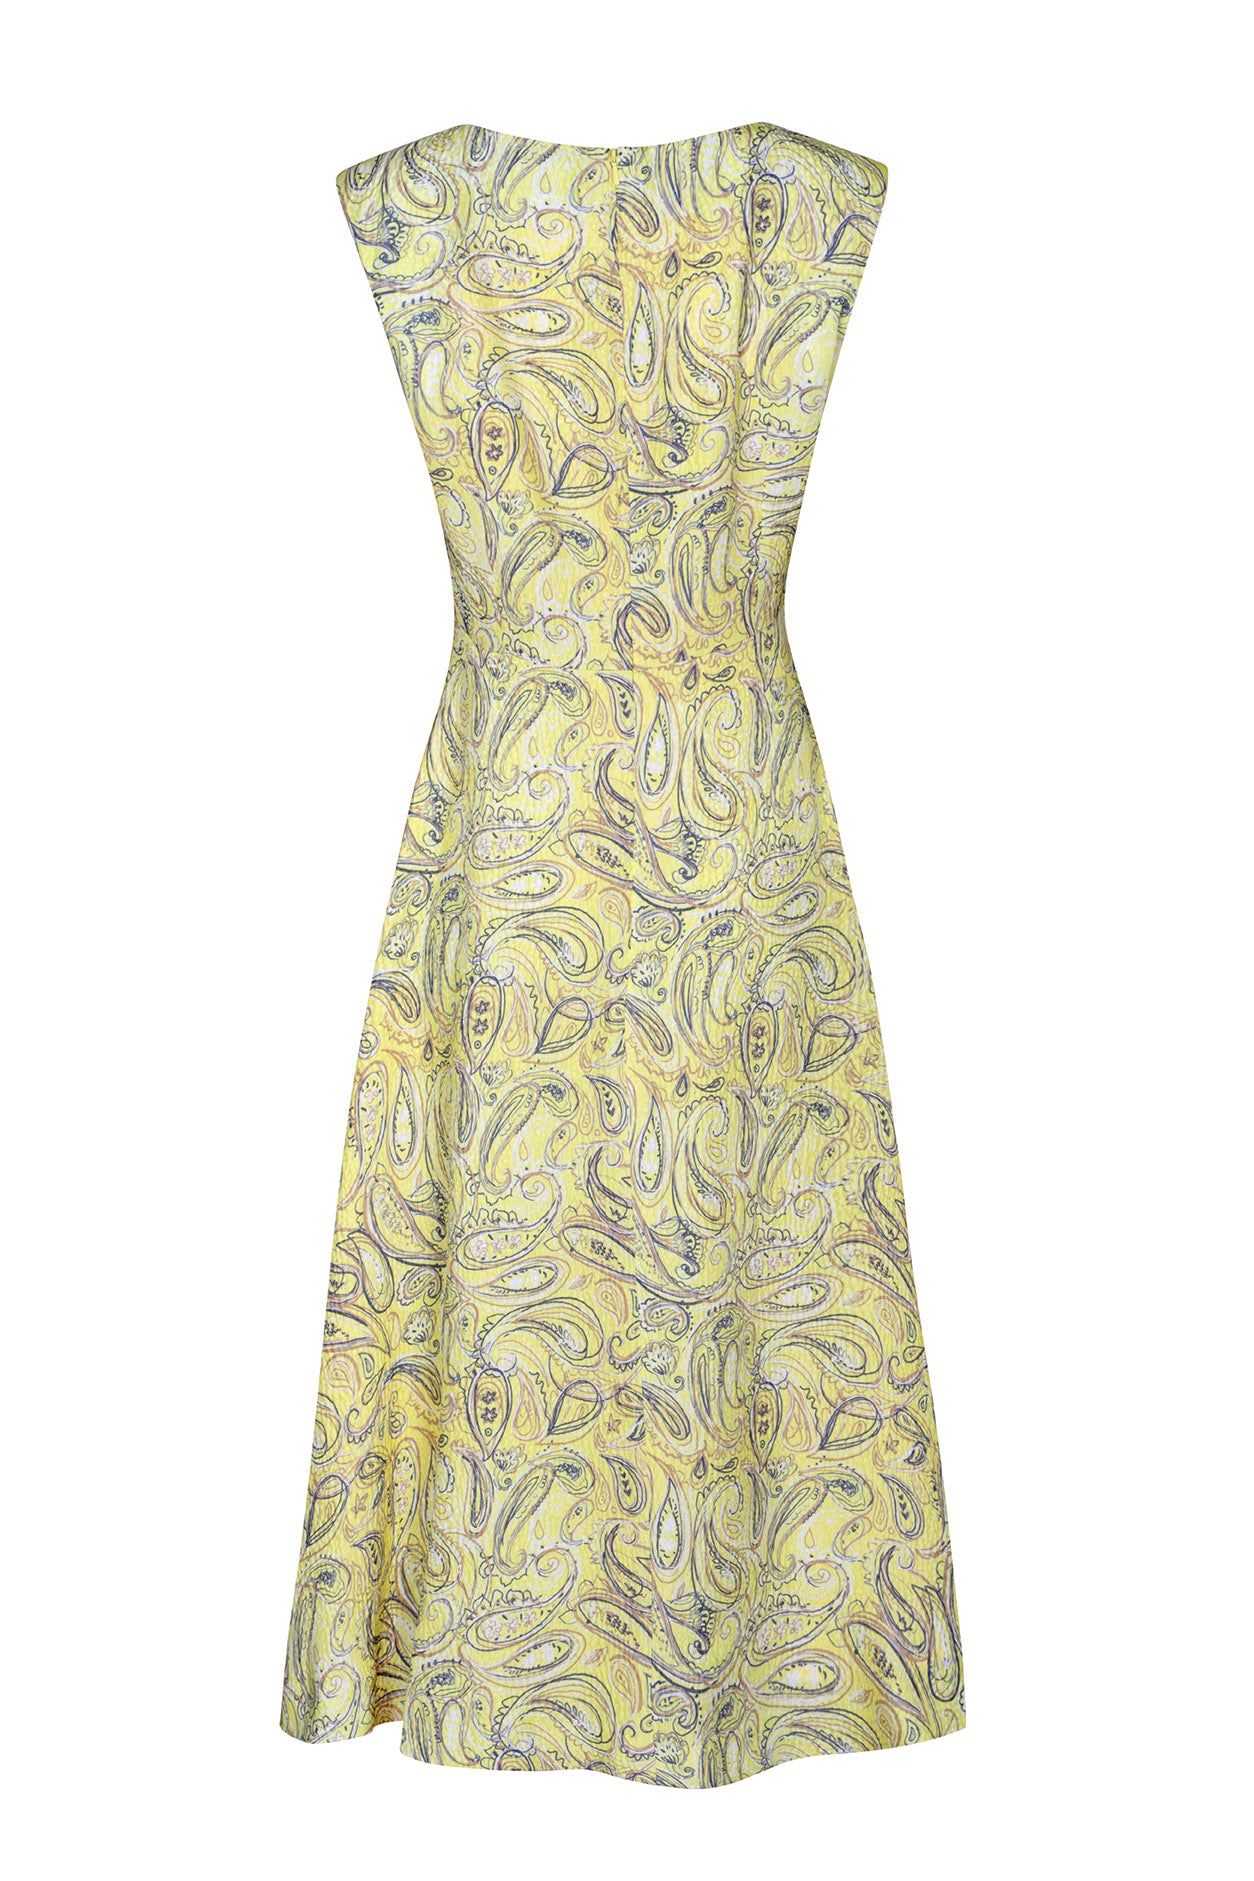 Sleeveless Midi Dress in Lemon Yellow Paisley Printed Silk Cloqué - Letty